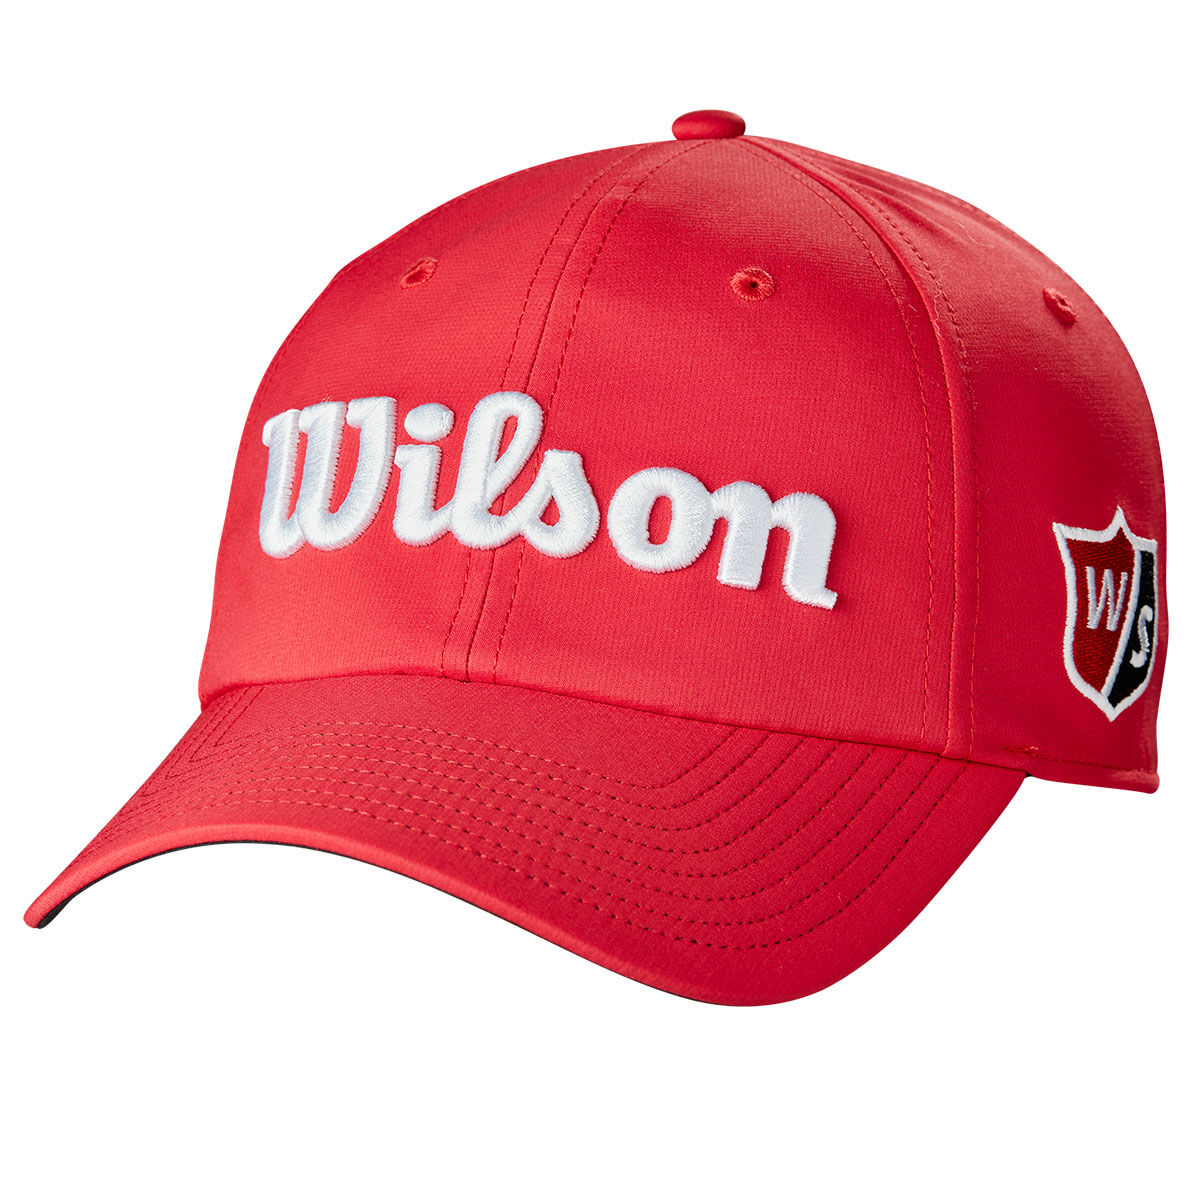 Wilson Men’s Pro Tour Golf Cap, Mens, Red/white, One size | American Golf